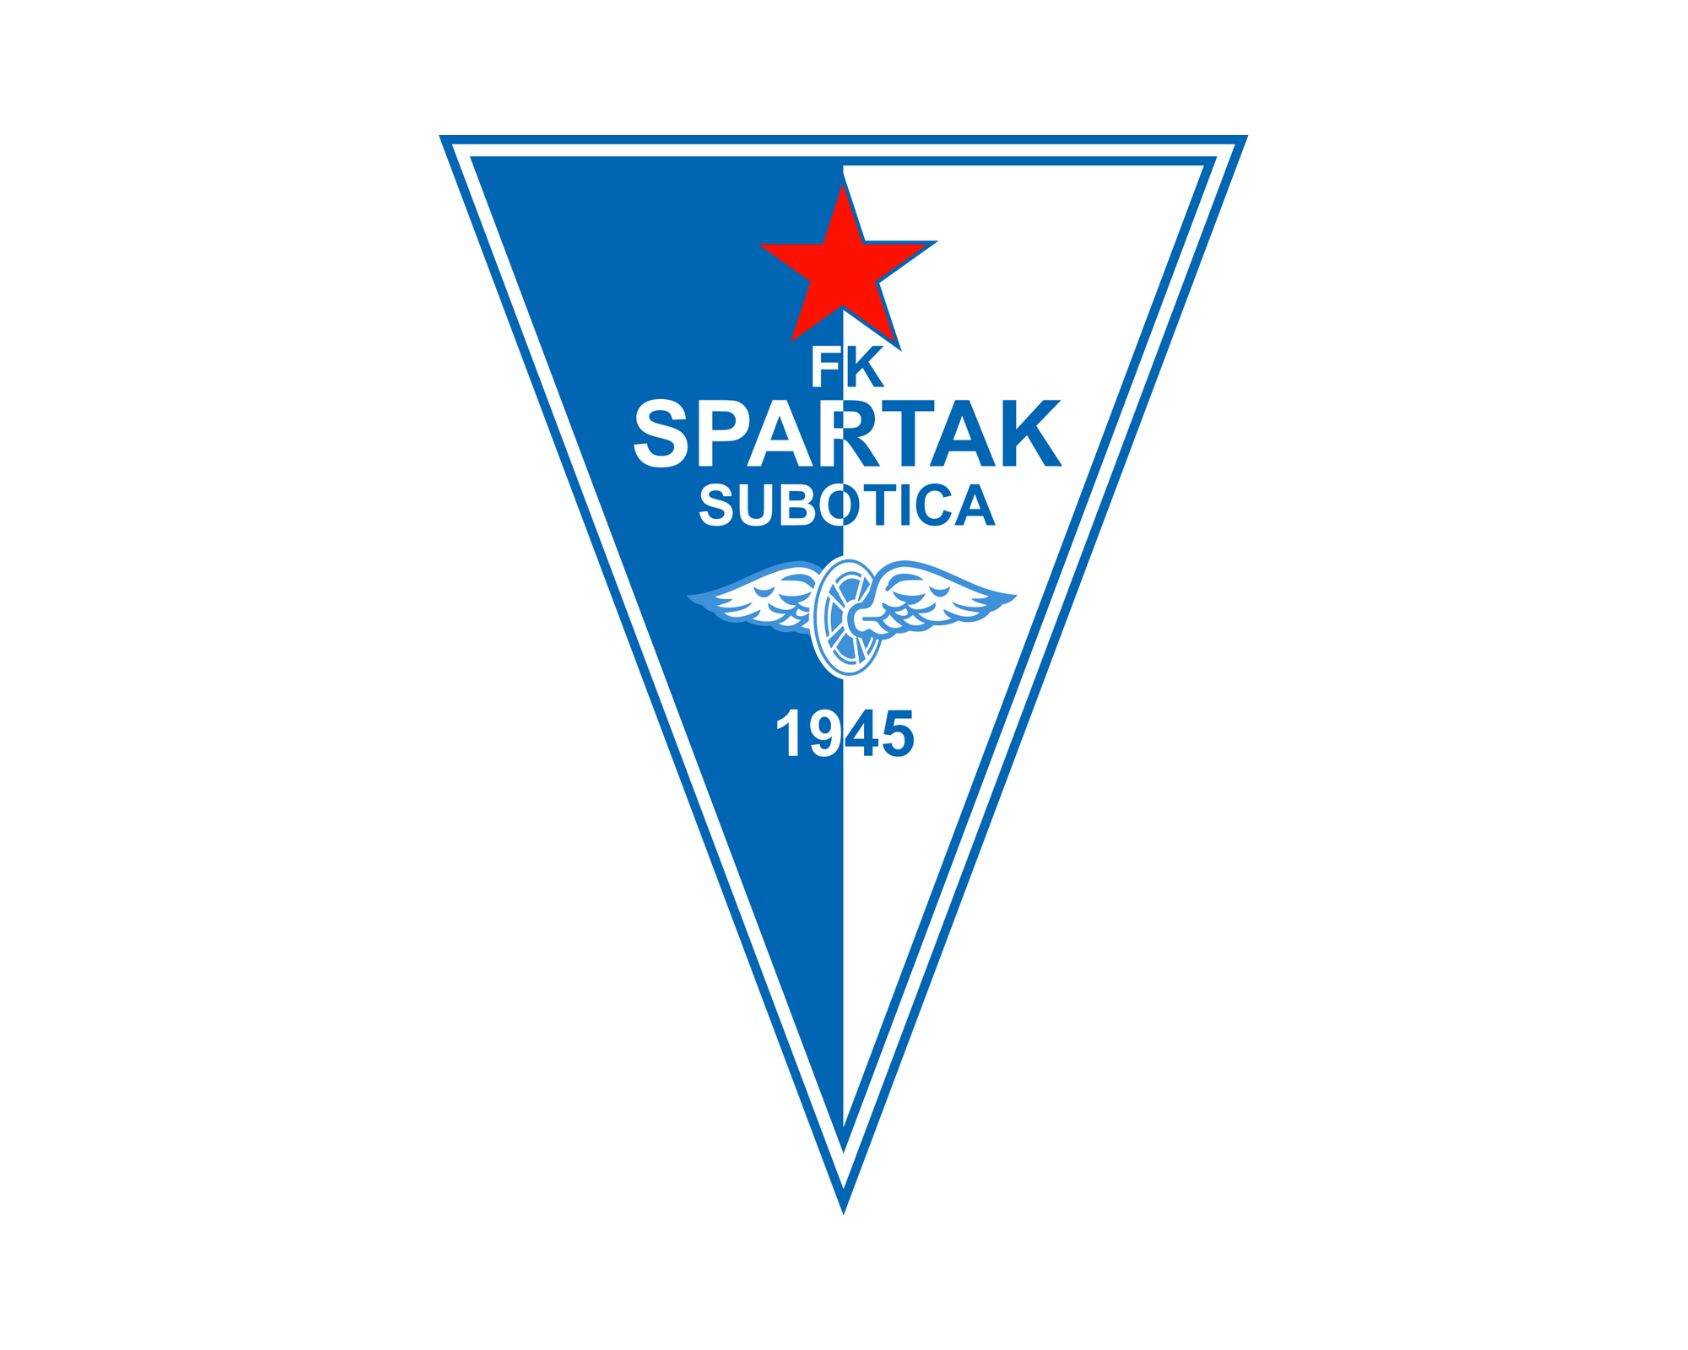 fk-spartak-subotica-10-football-club-facts